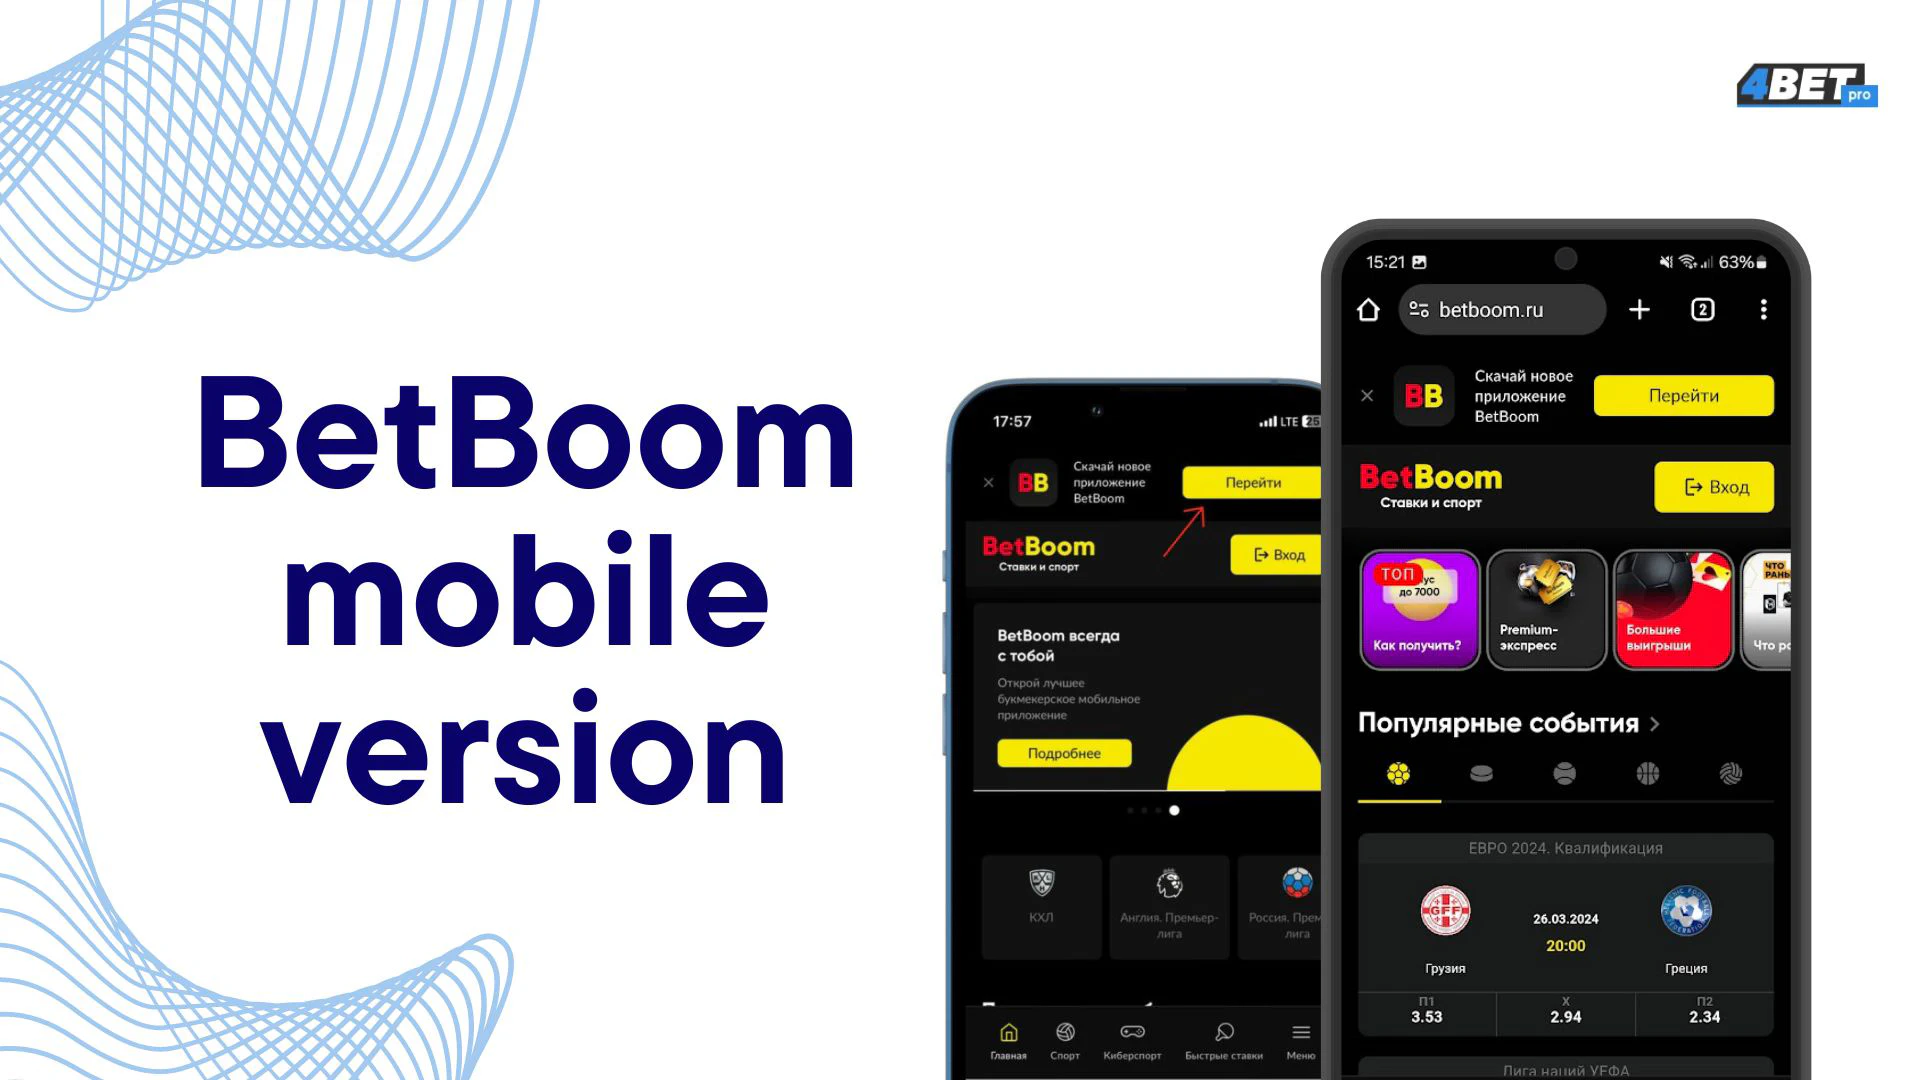 Download the BetBoom app